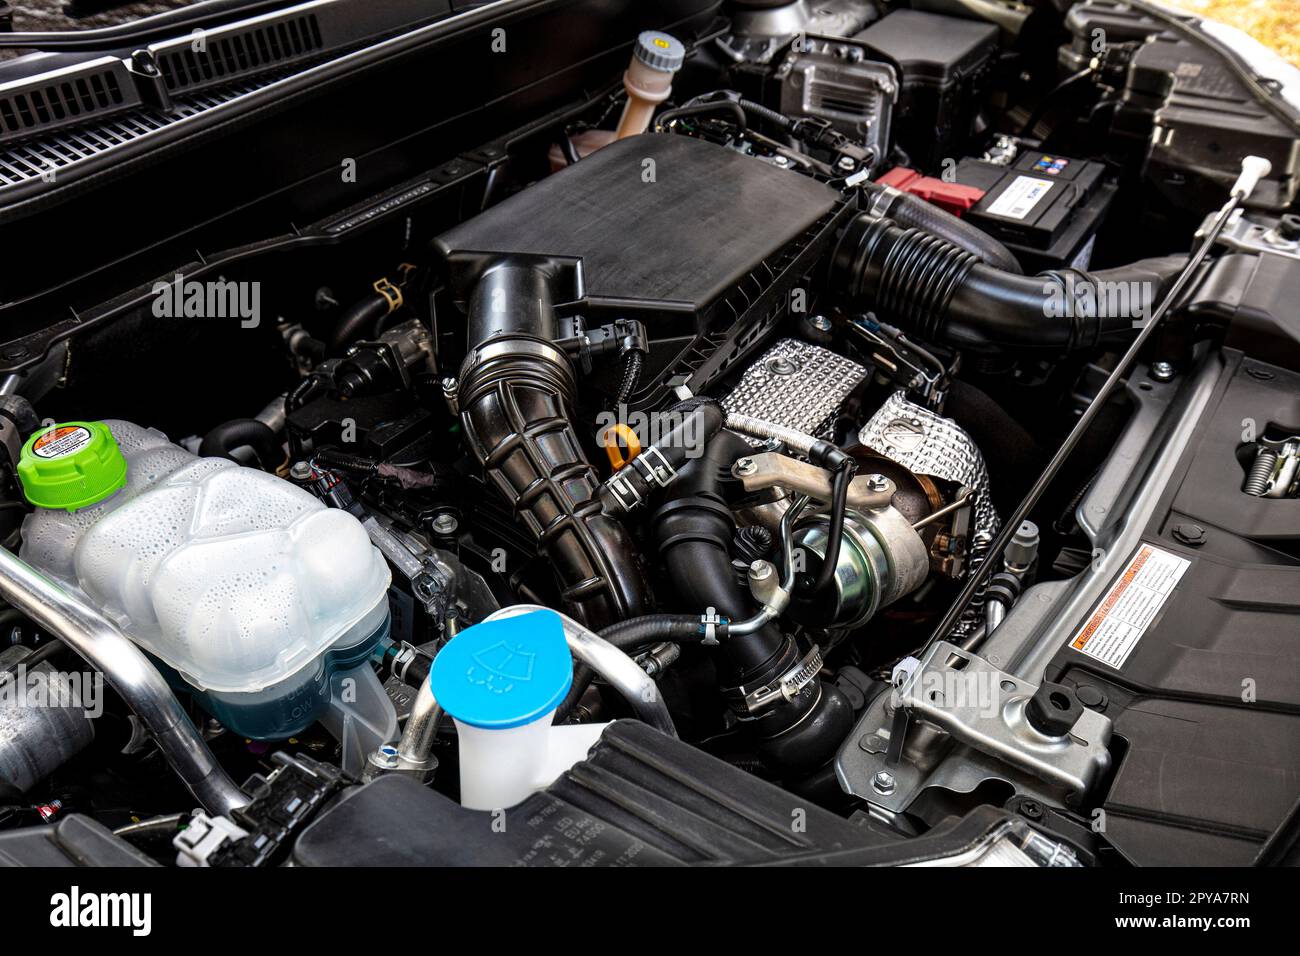 medium hybrid car engine Stock Photo